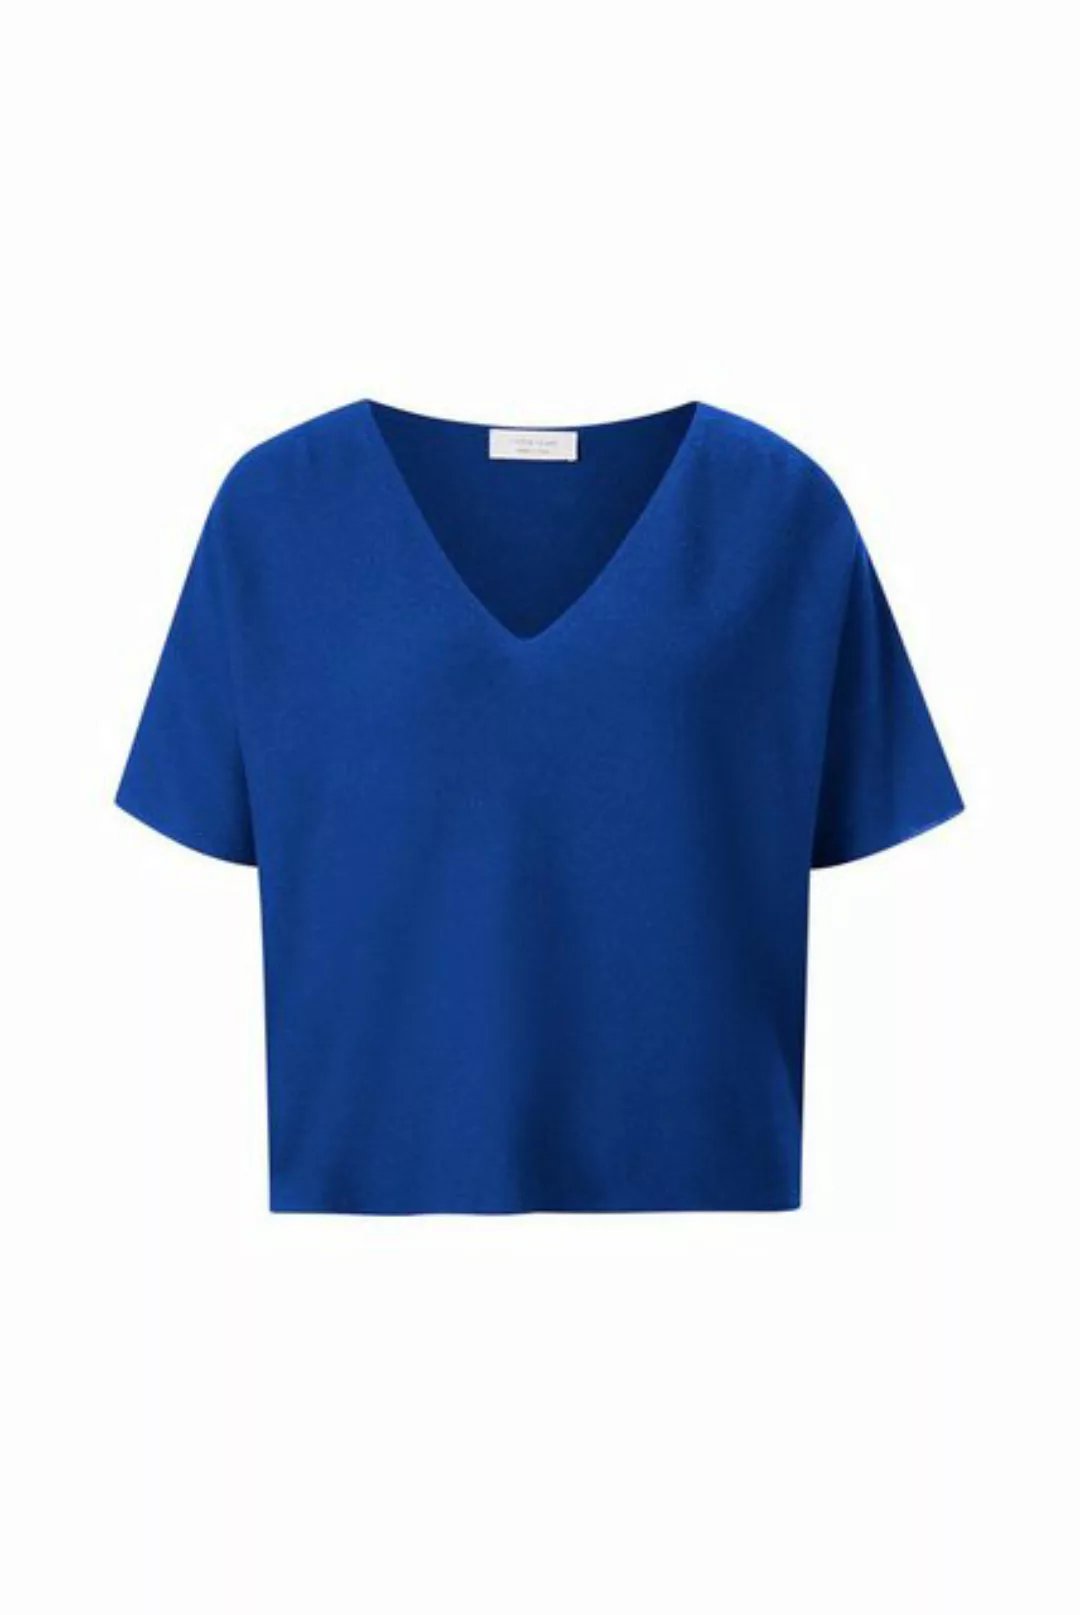 Rich & Royal Sweatshirt finegauge seamless pullover GRS, azzure blue günstig online kaufen